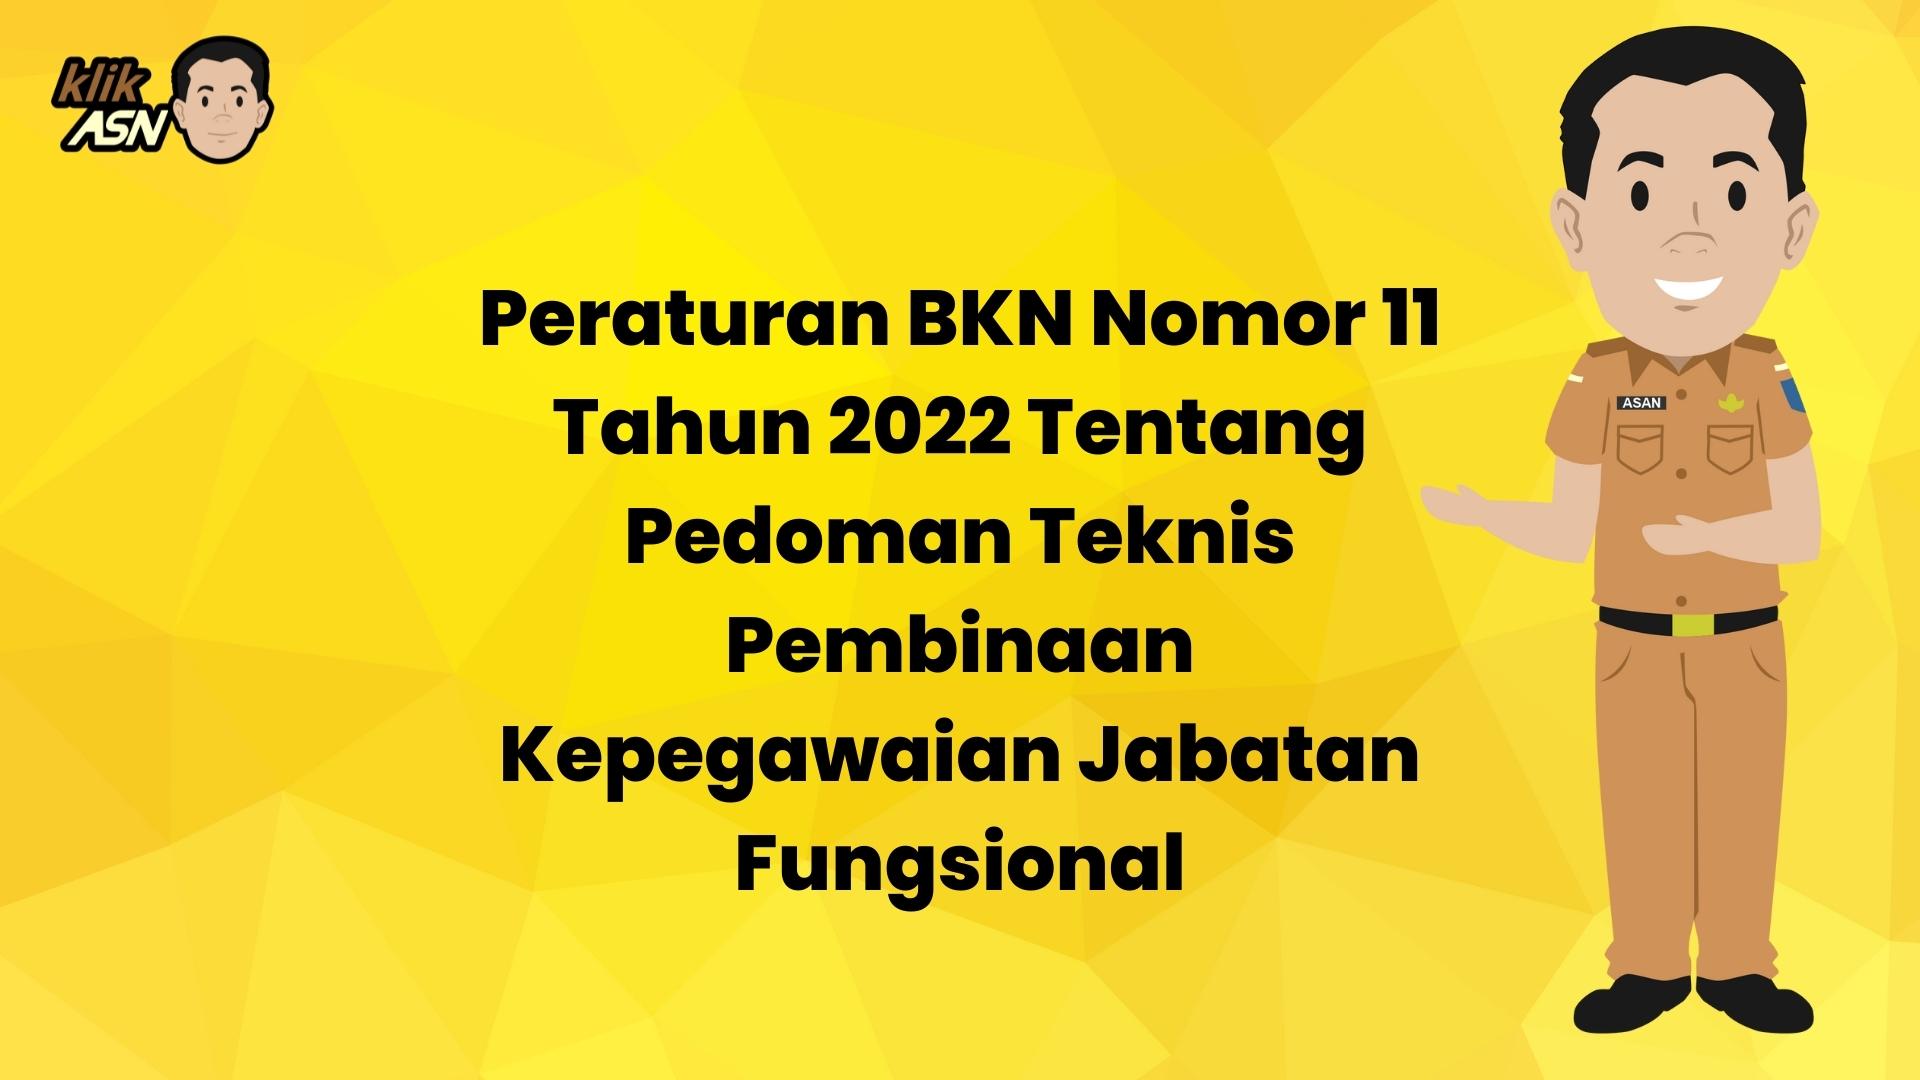 Peraturan BKN Nomor 11 tahun 2022